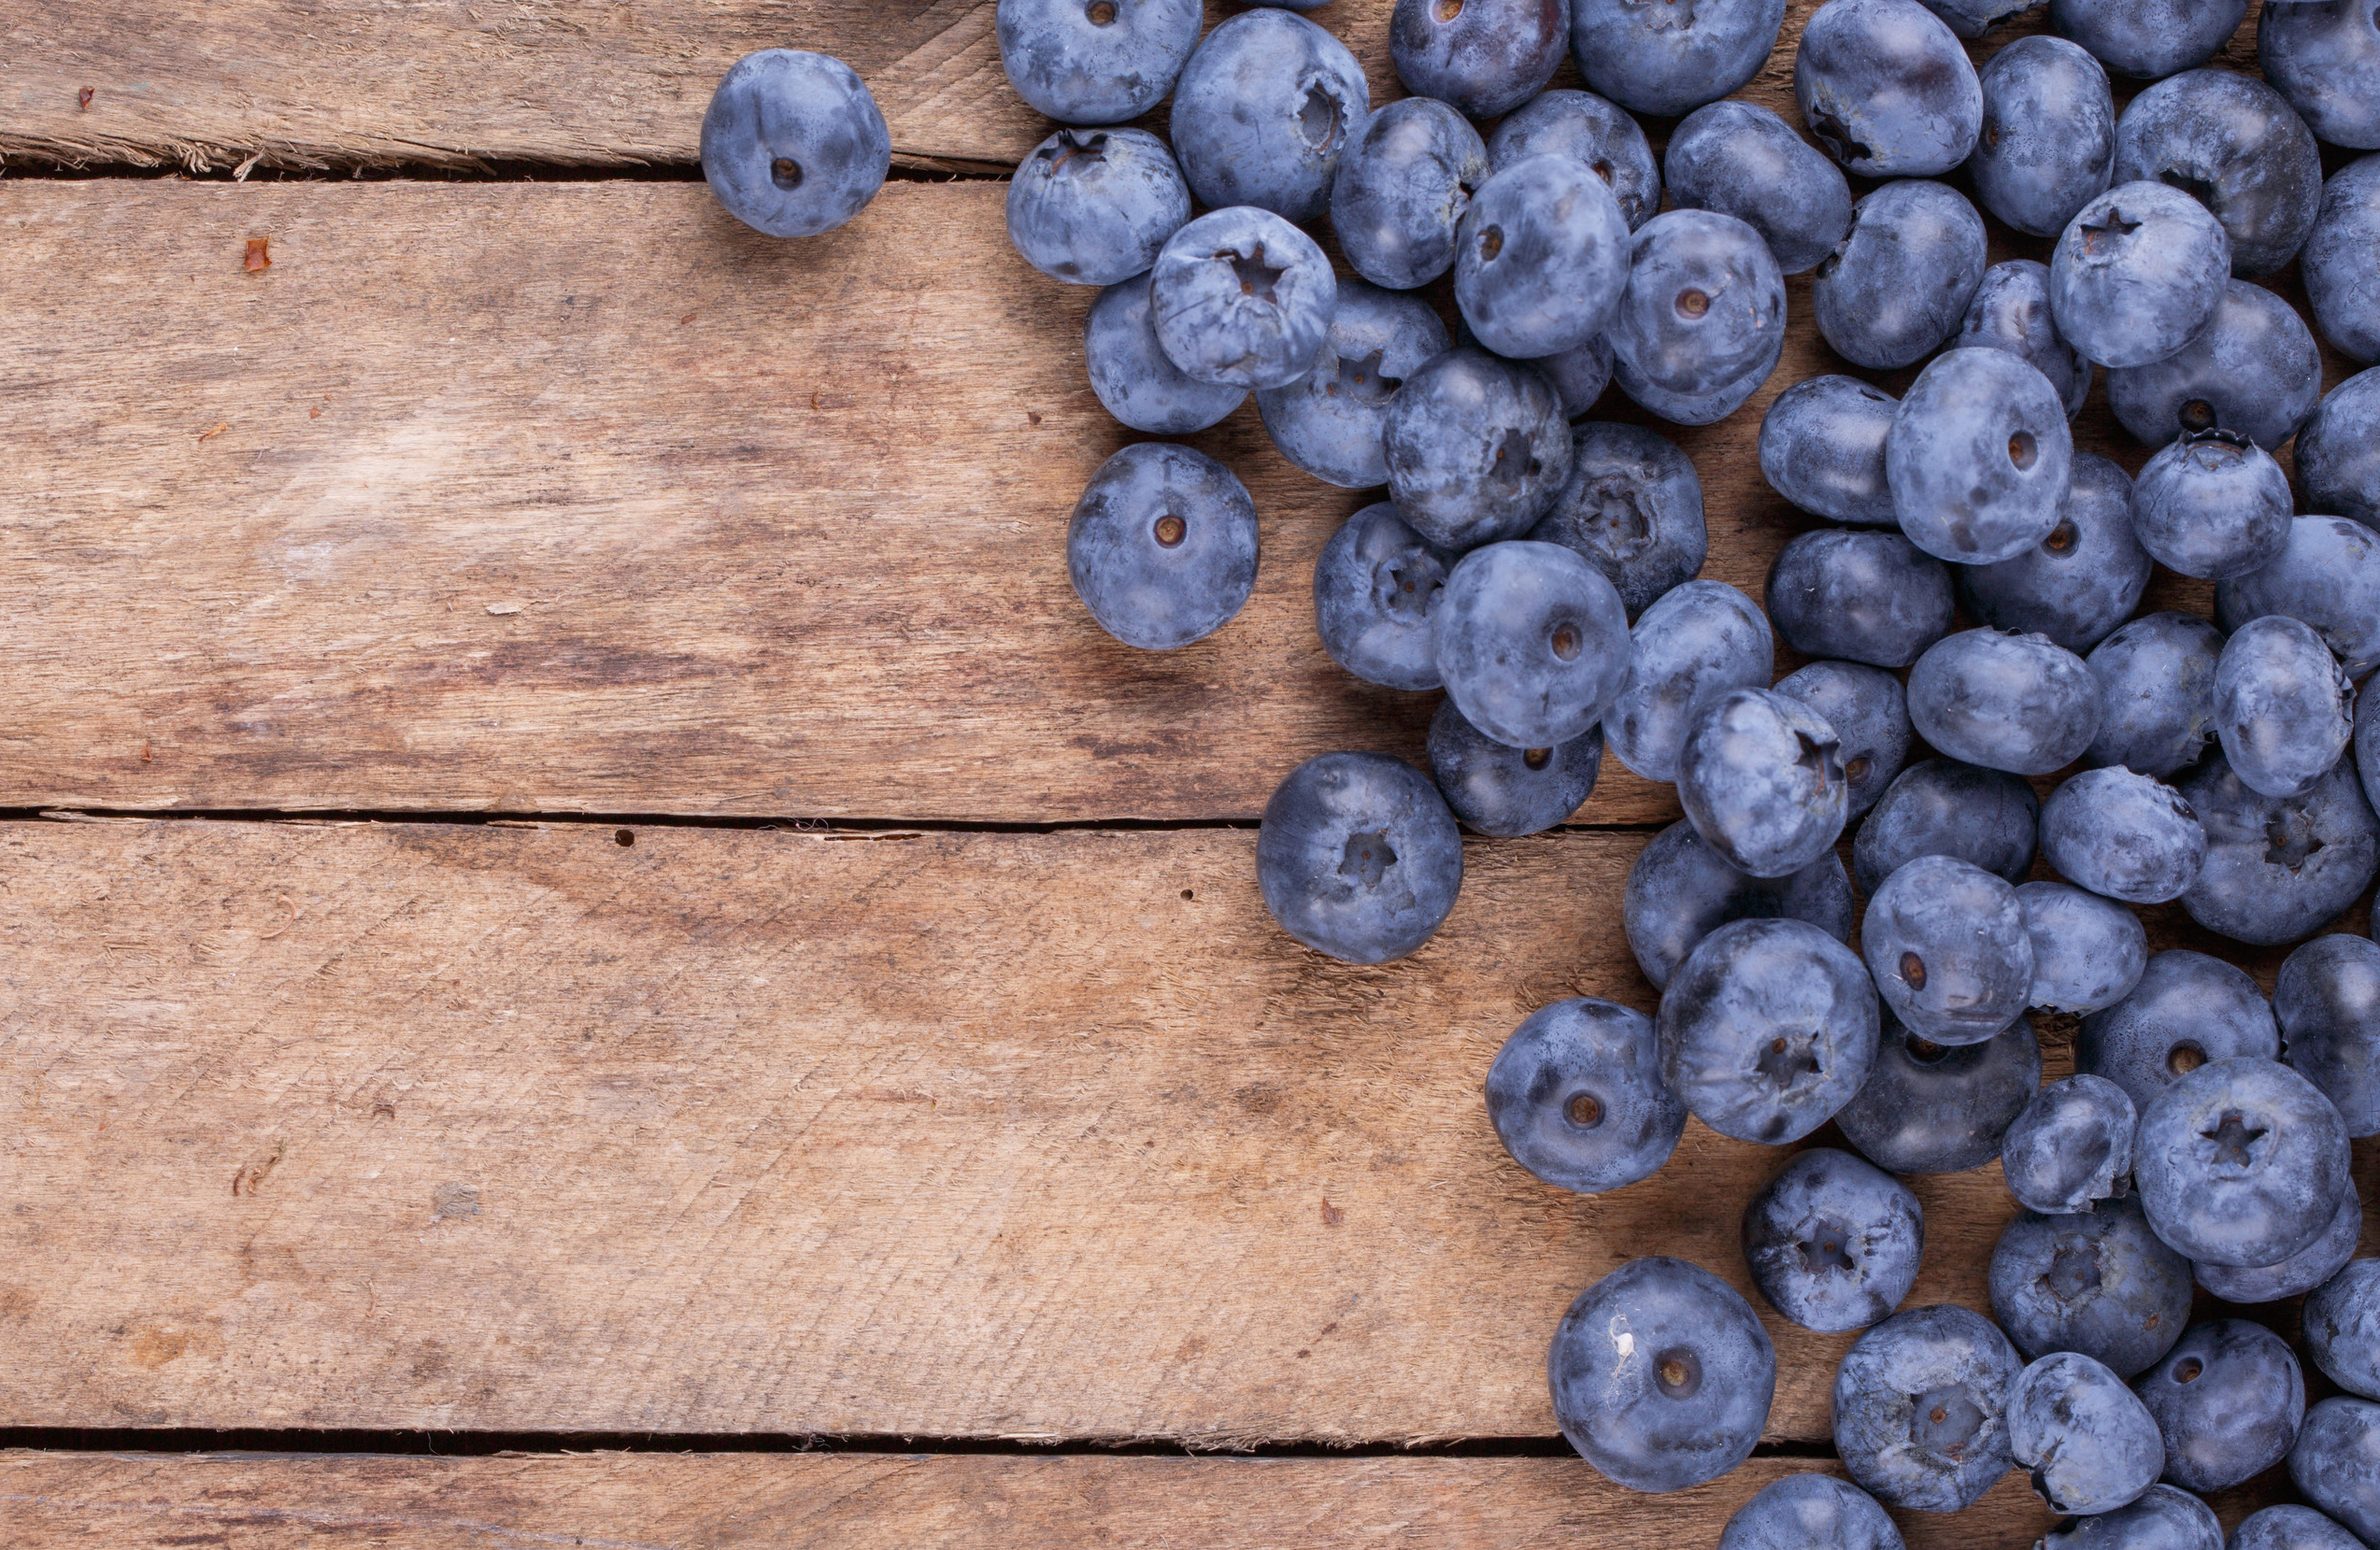 Blueberry-Recipes-2018-title.jpg